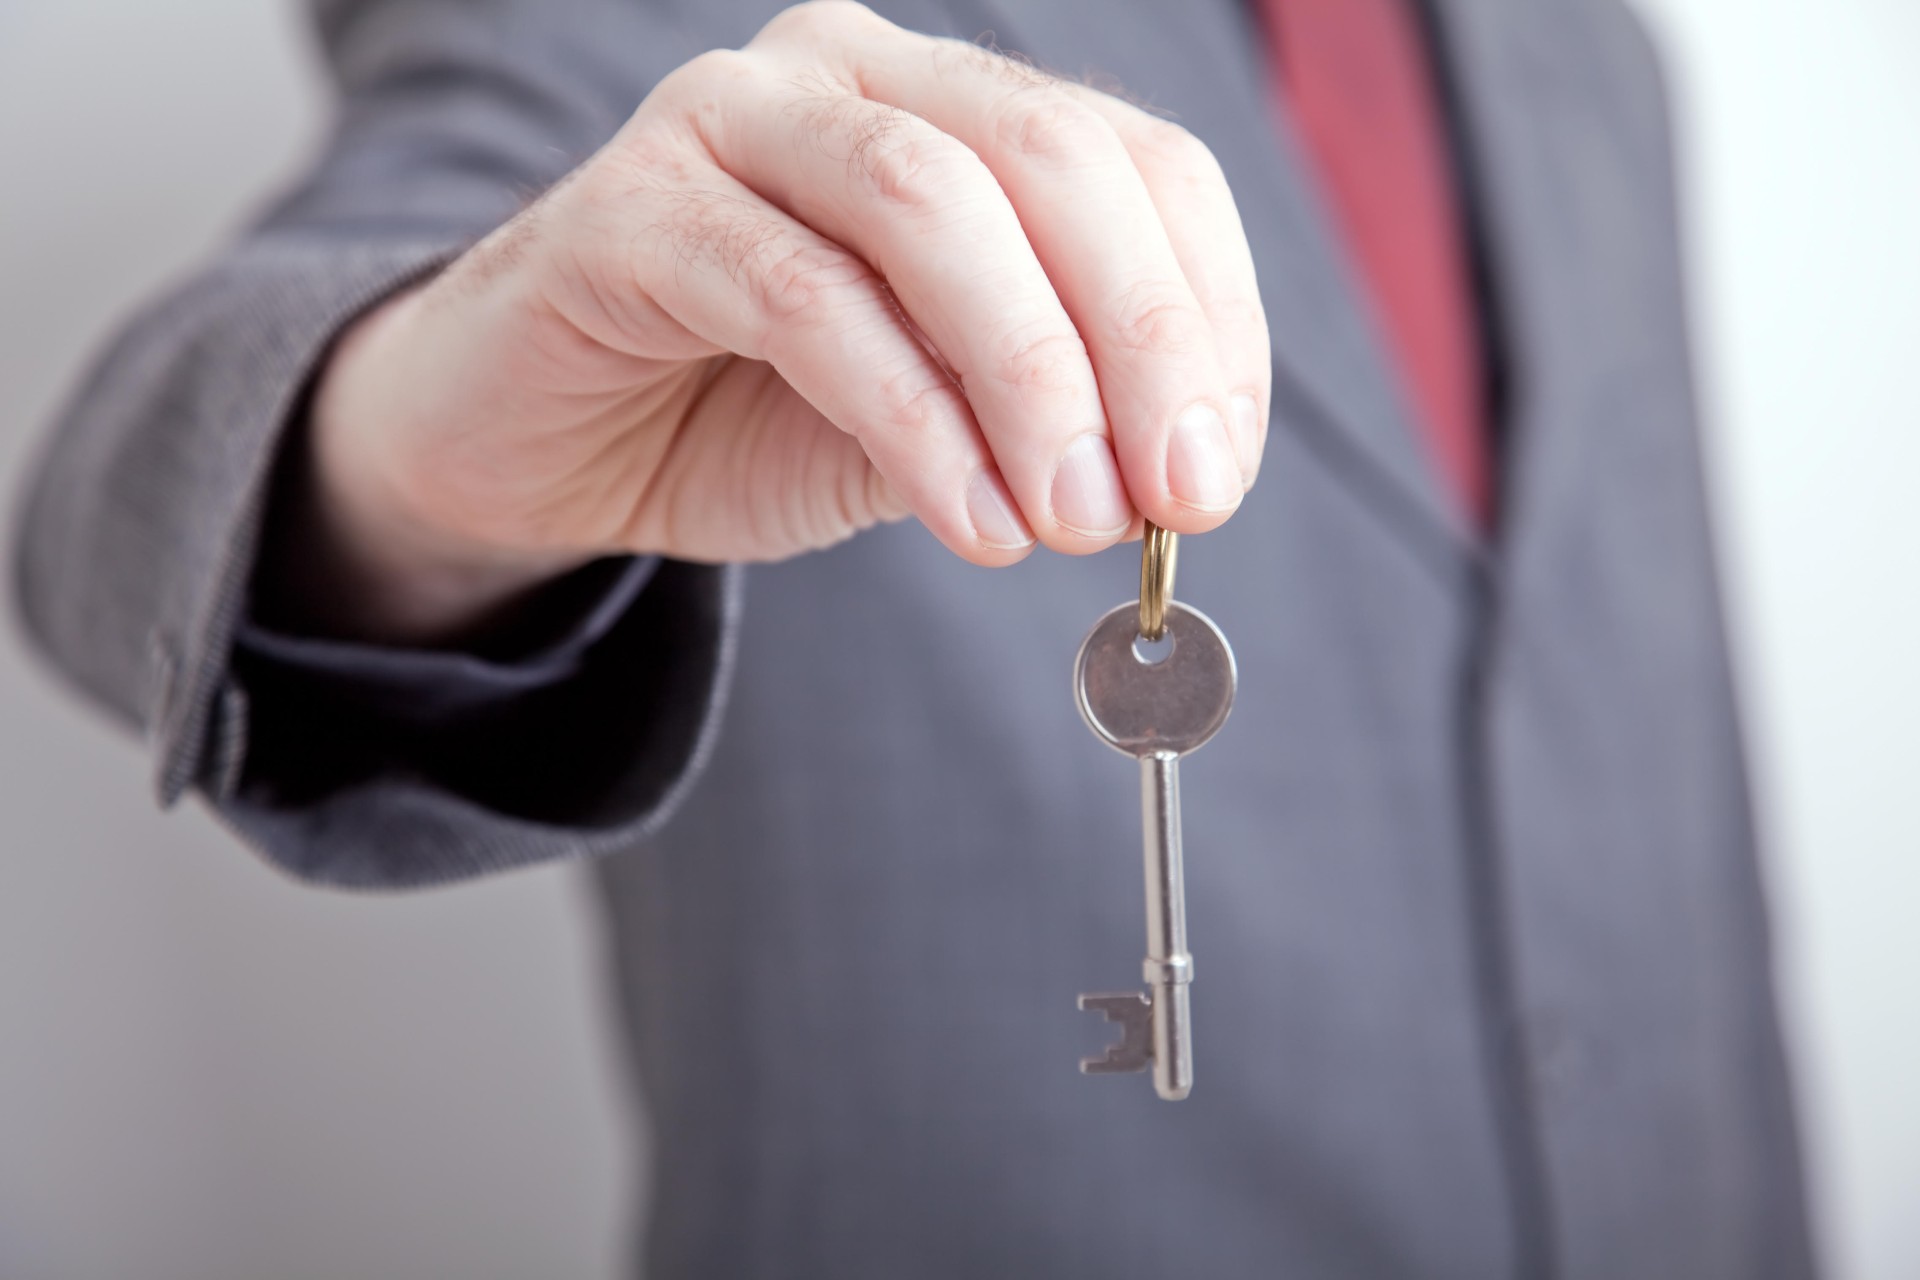 A landlord holding a key